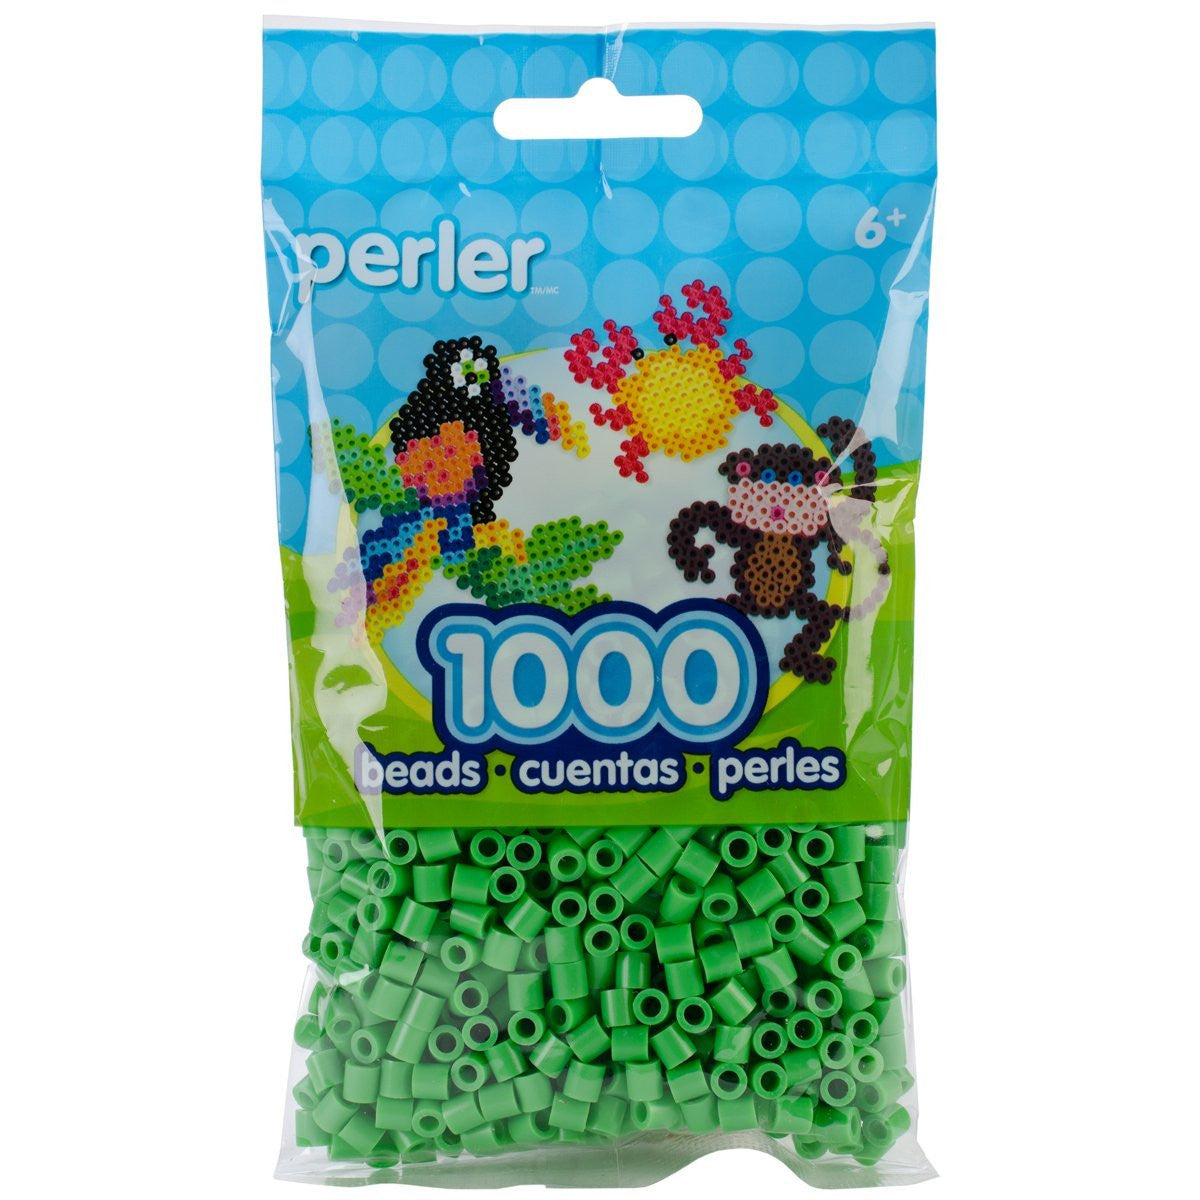 Perler 10.5 x 14 Clear Fun Fusion Bead Super Pegboards 3pc